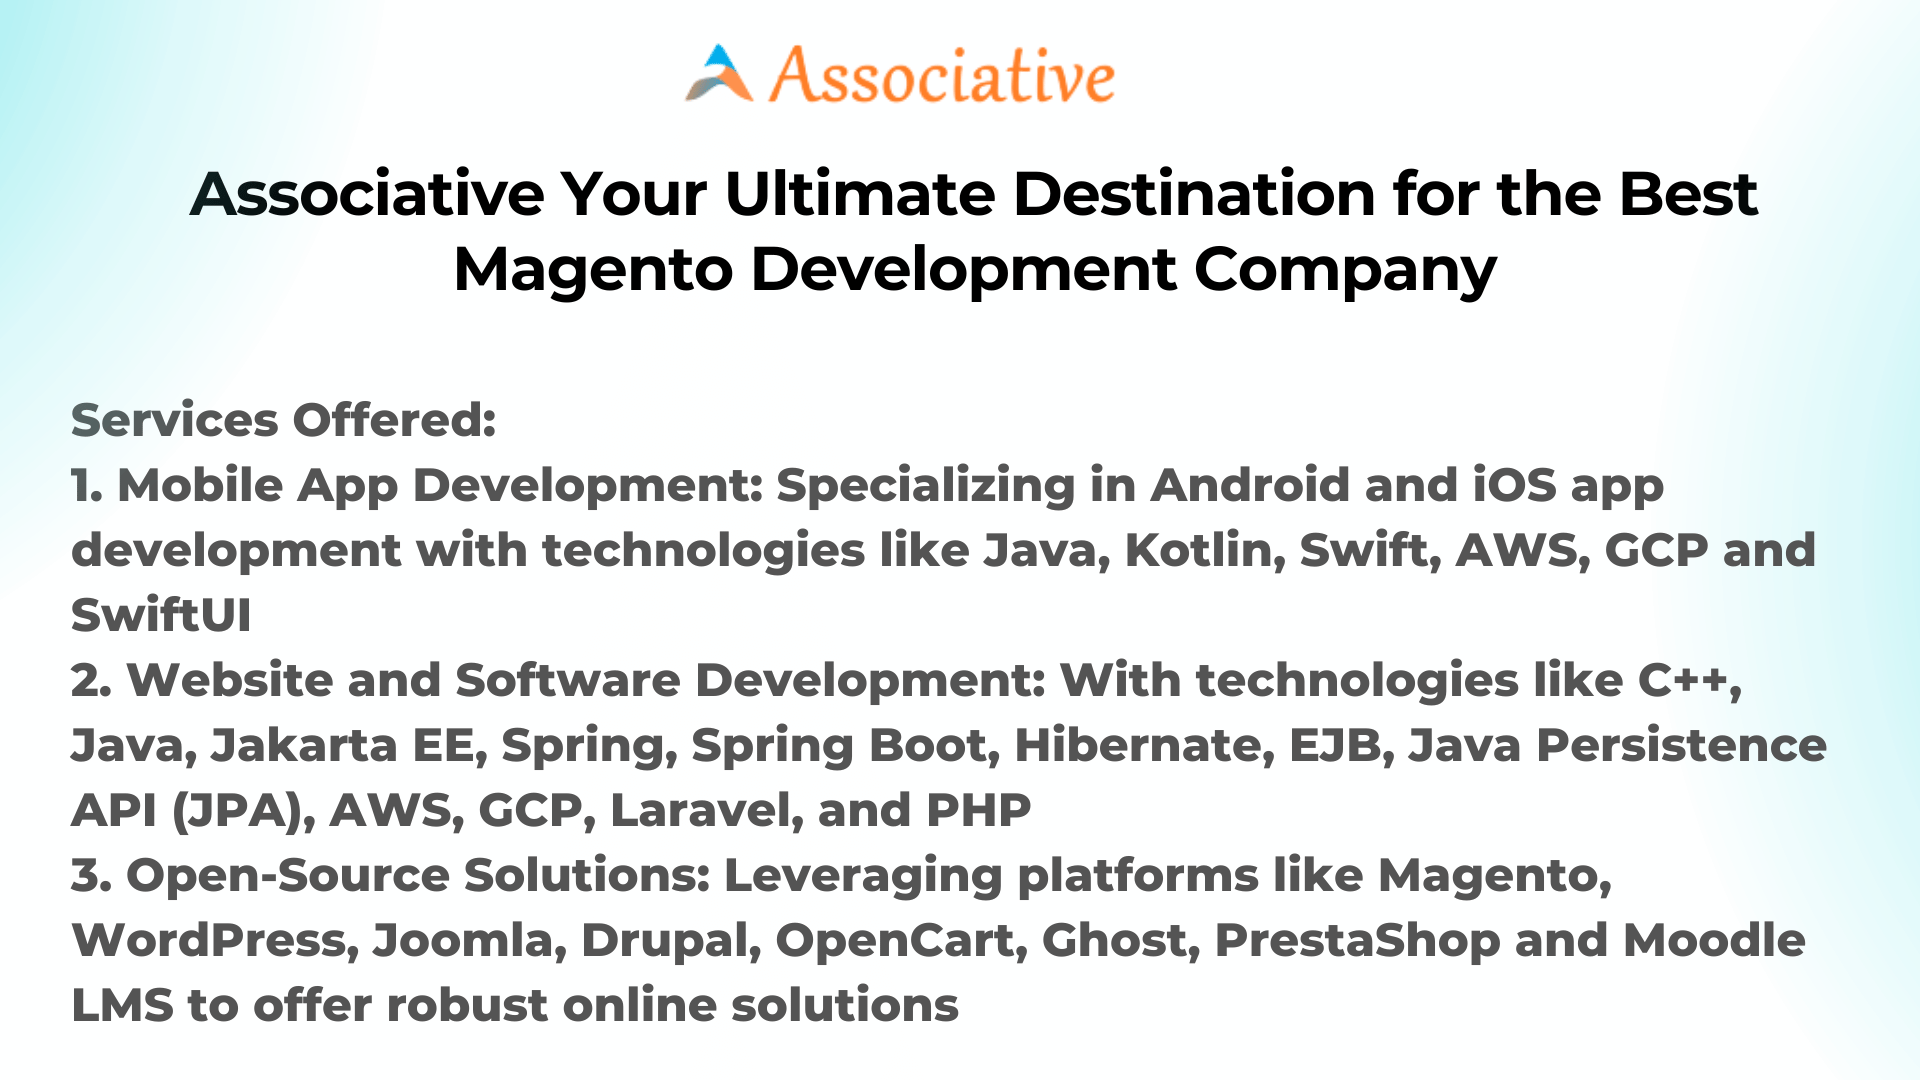 Associative Your Ultimate Destination for the Best Magento Development Company